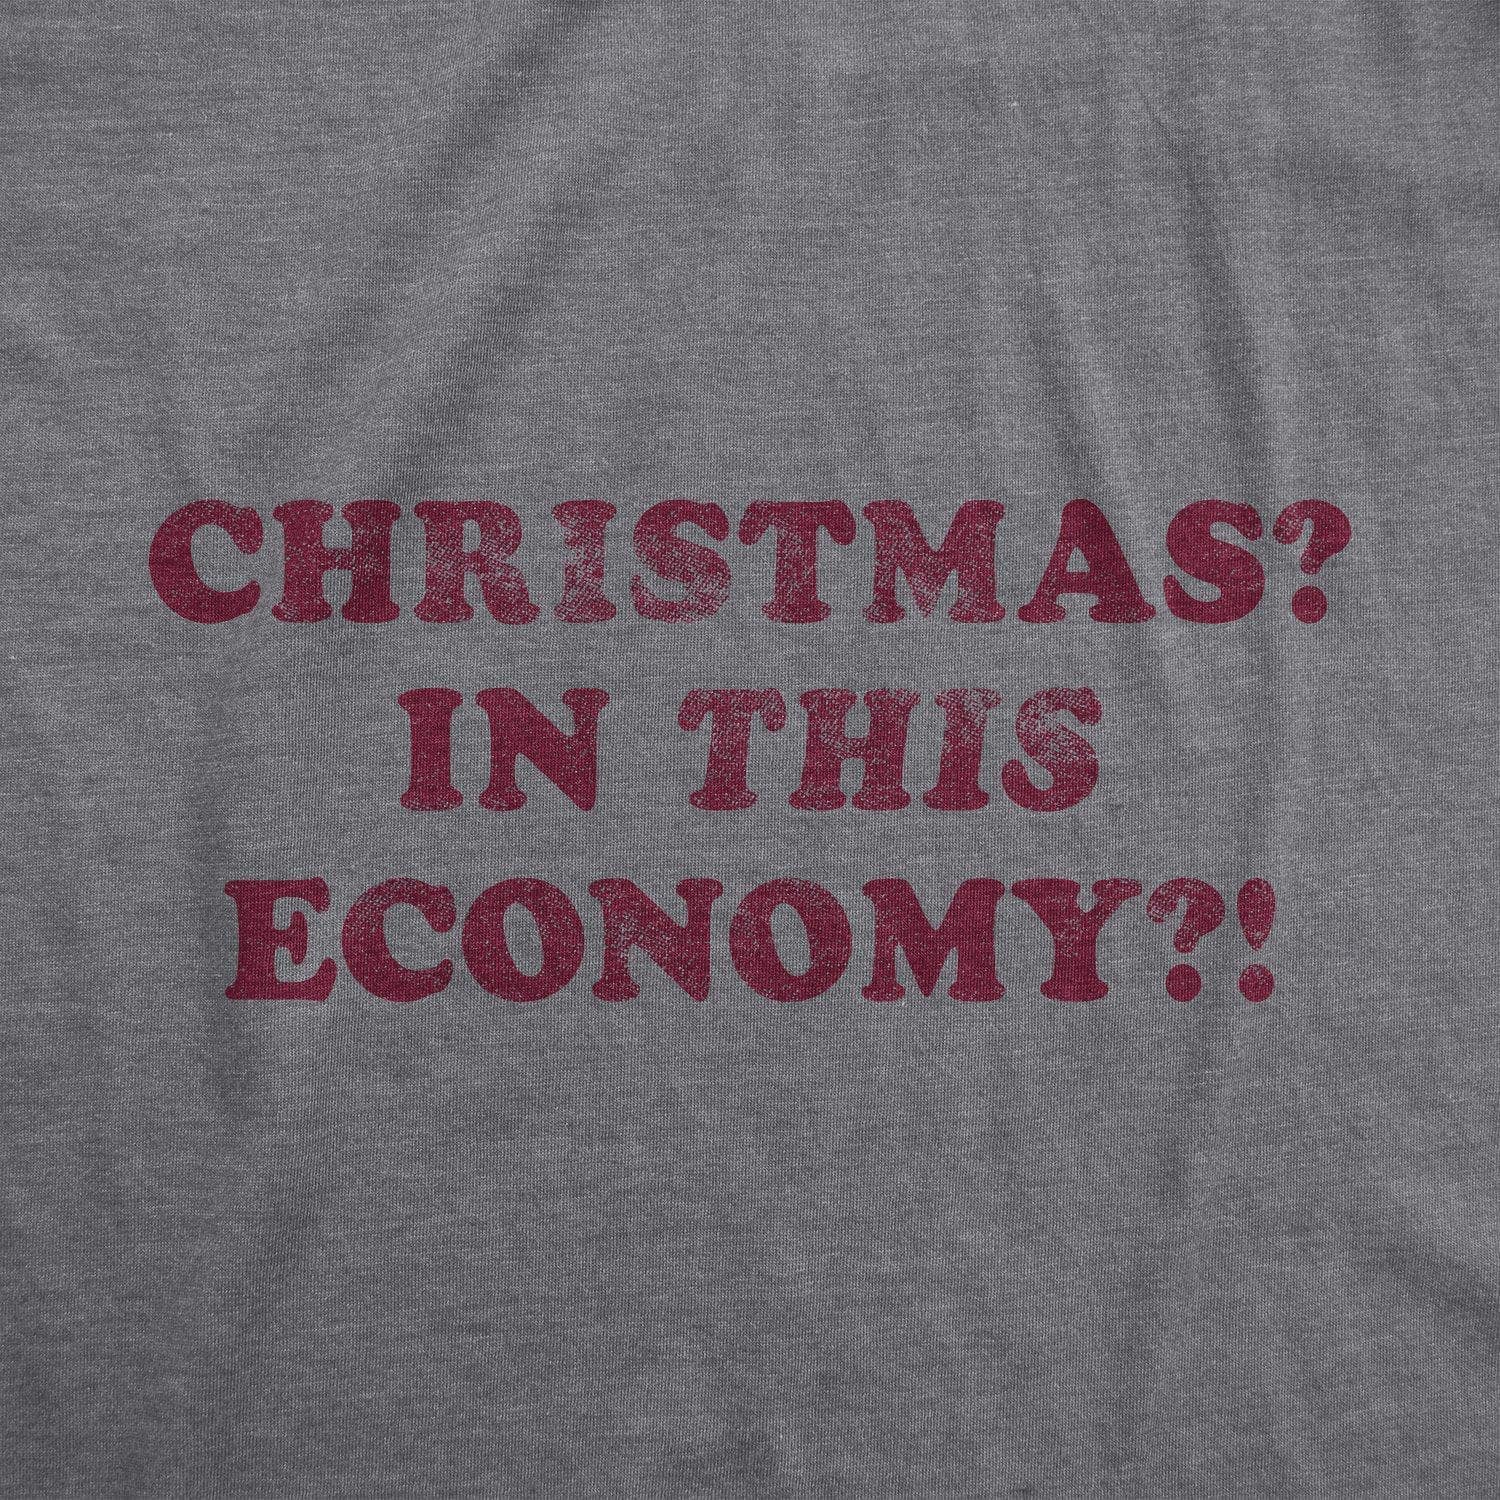 Christmas? In This Economy? Men's Tshirt - Crazy Dog T-Shirts